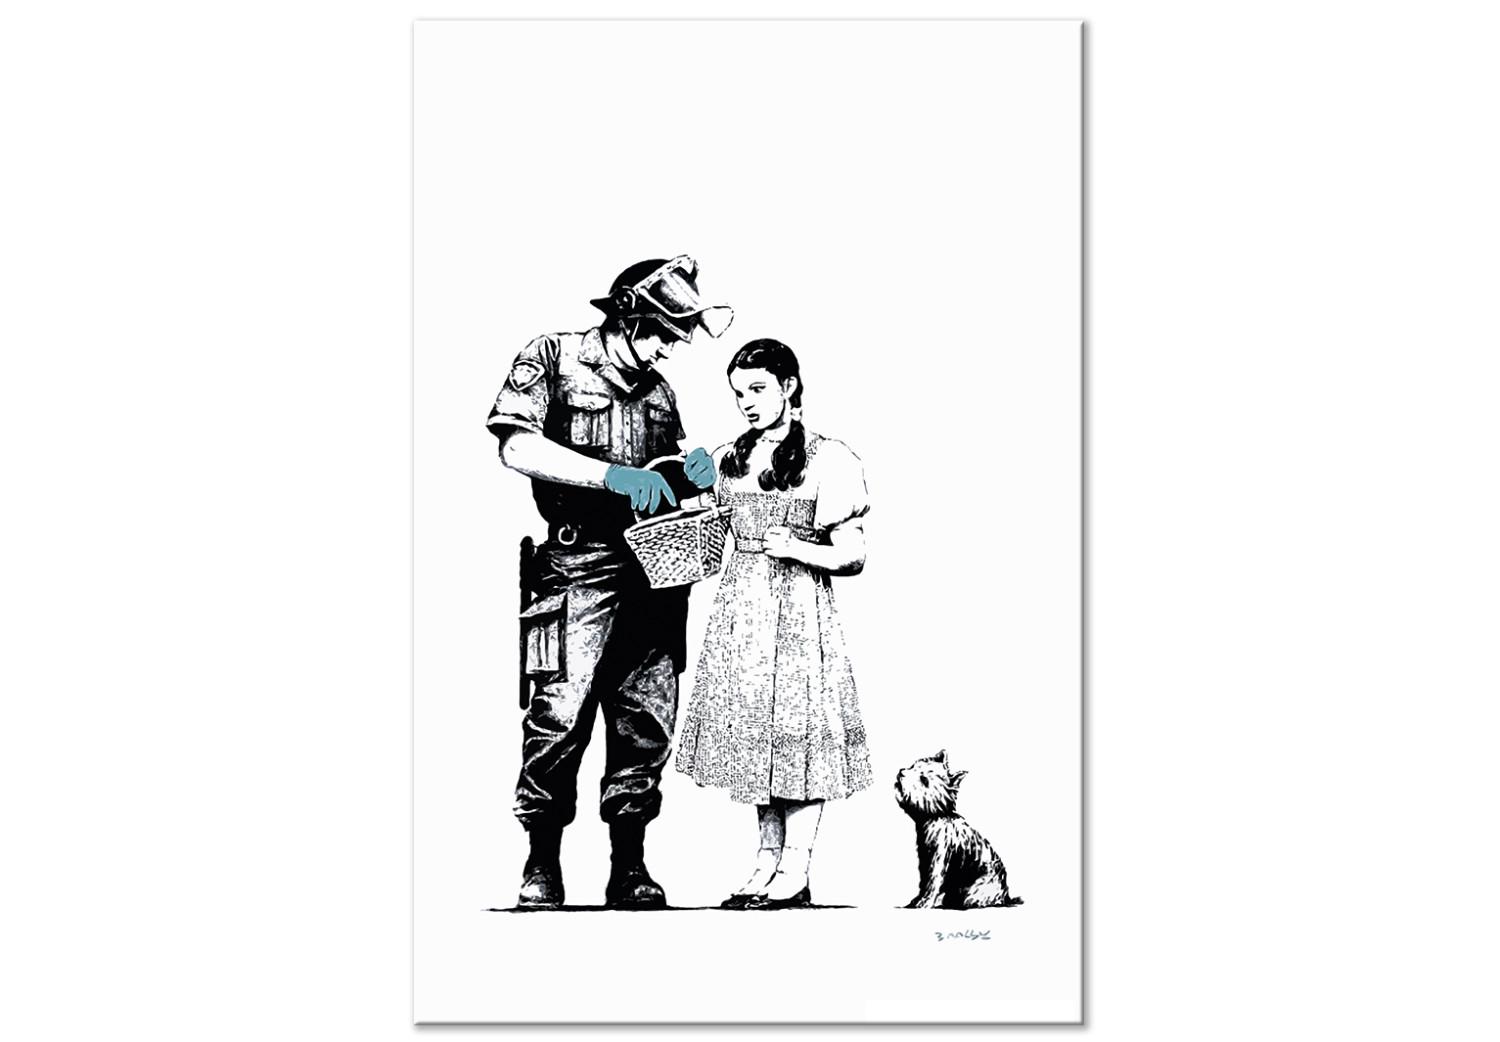 Canvas Girl, dog and policeman - teenage street art style graphic